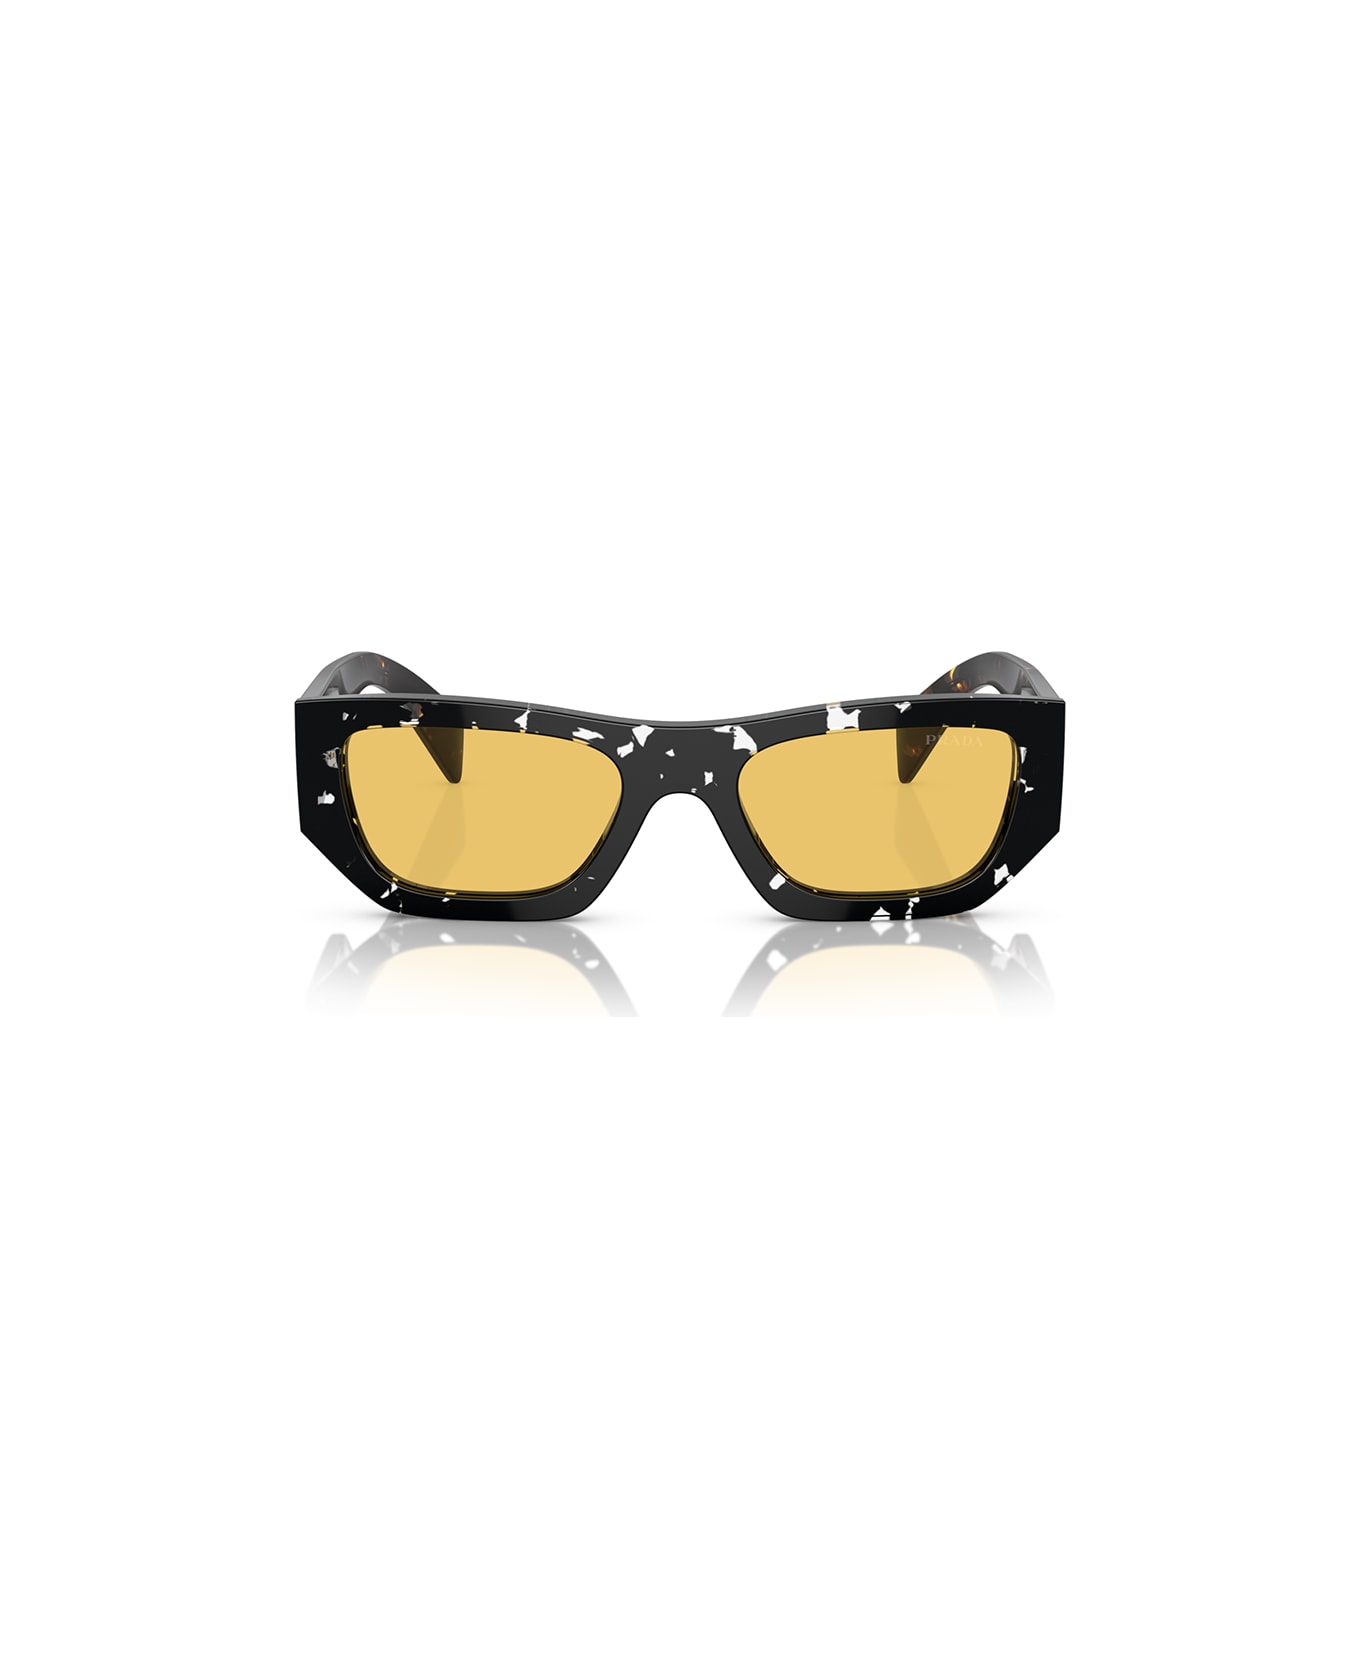 Prada Eyewear Sunglasses - Nero/Giallo サングラス